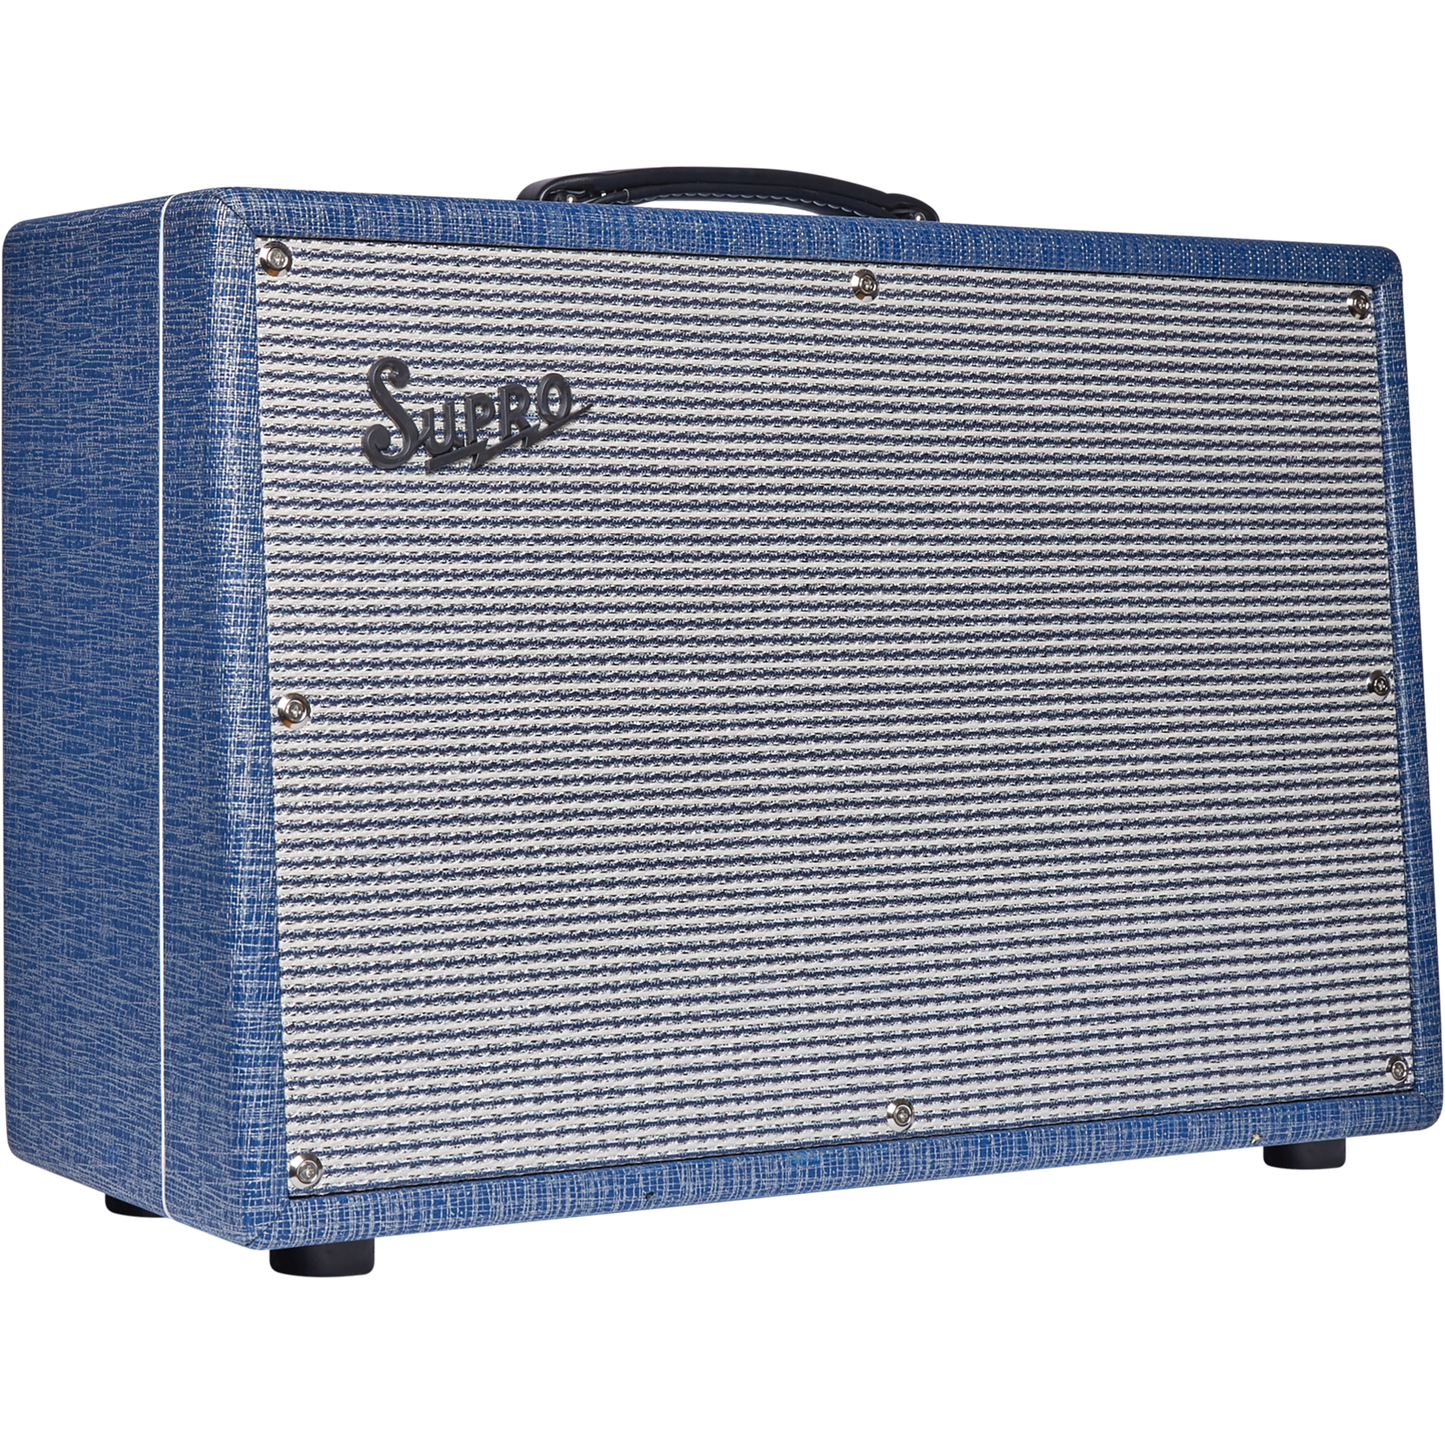 Supro Keeley Custom 12 1x12” Combo Amplifier